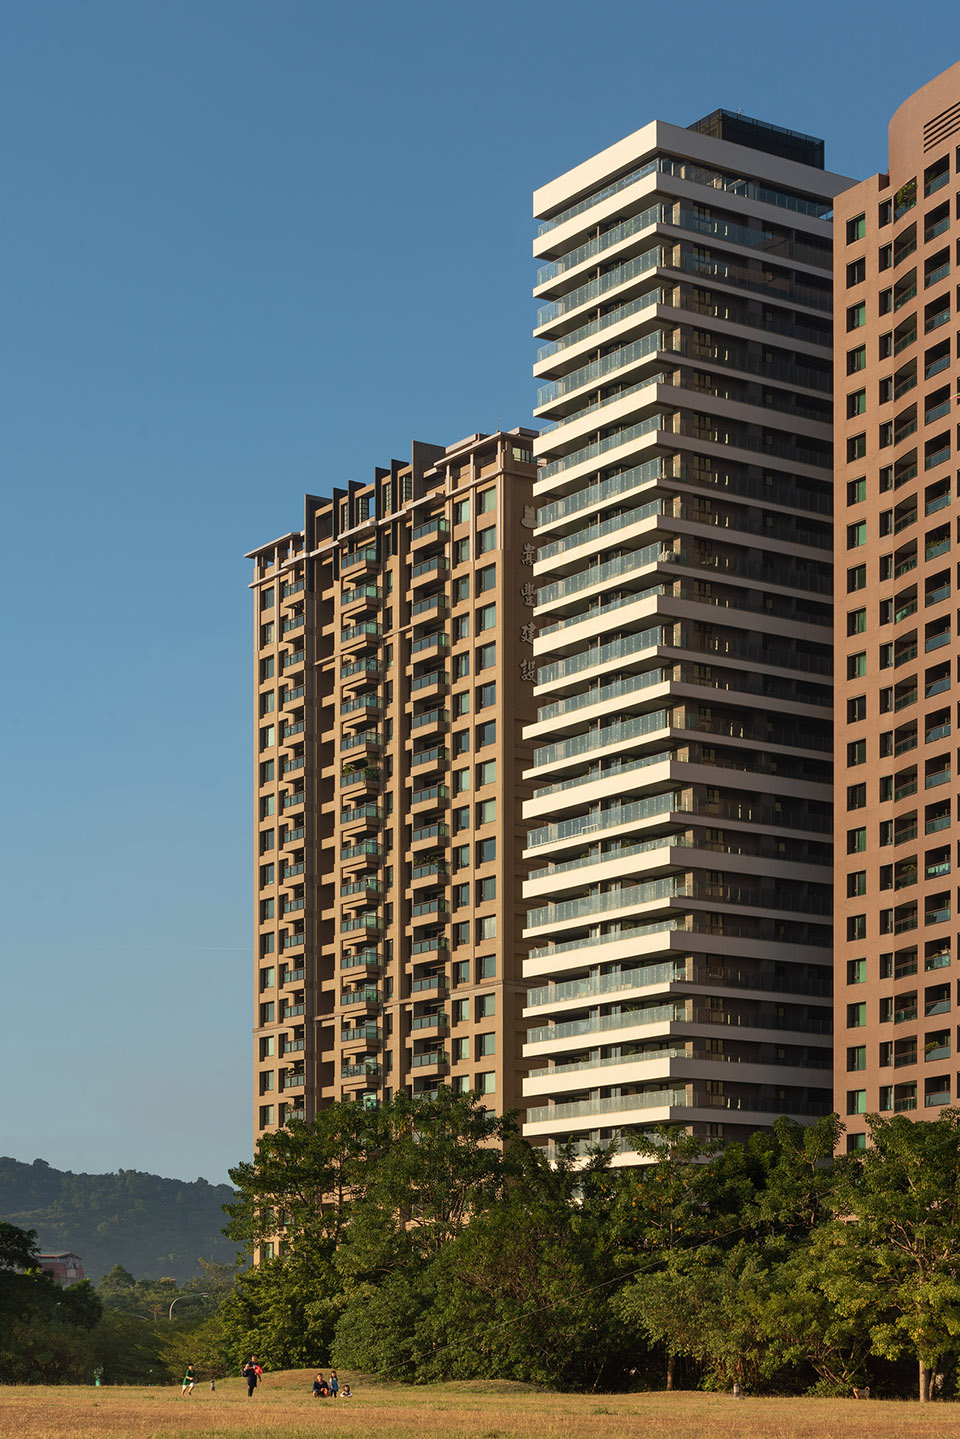 One More住宅楼，台湾/城市环境中的自然生活-50